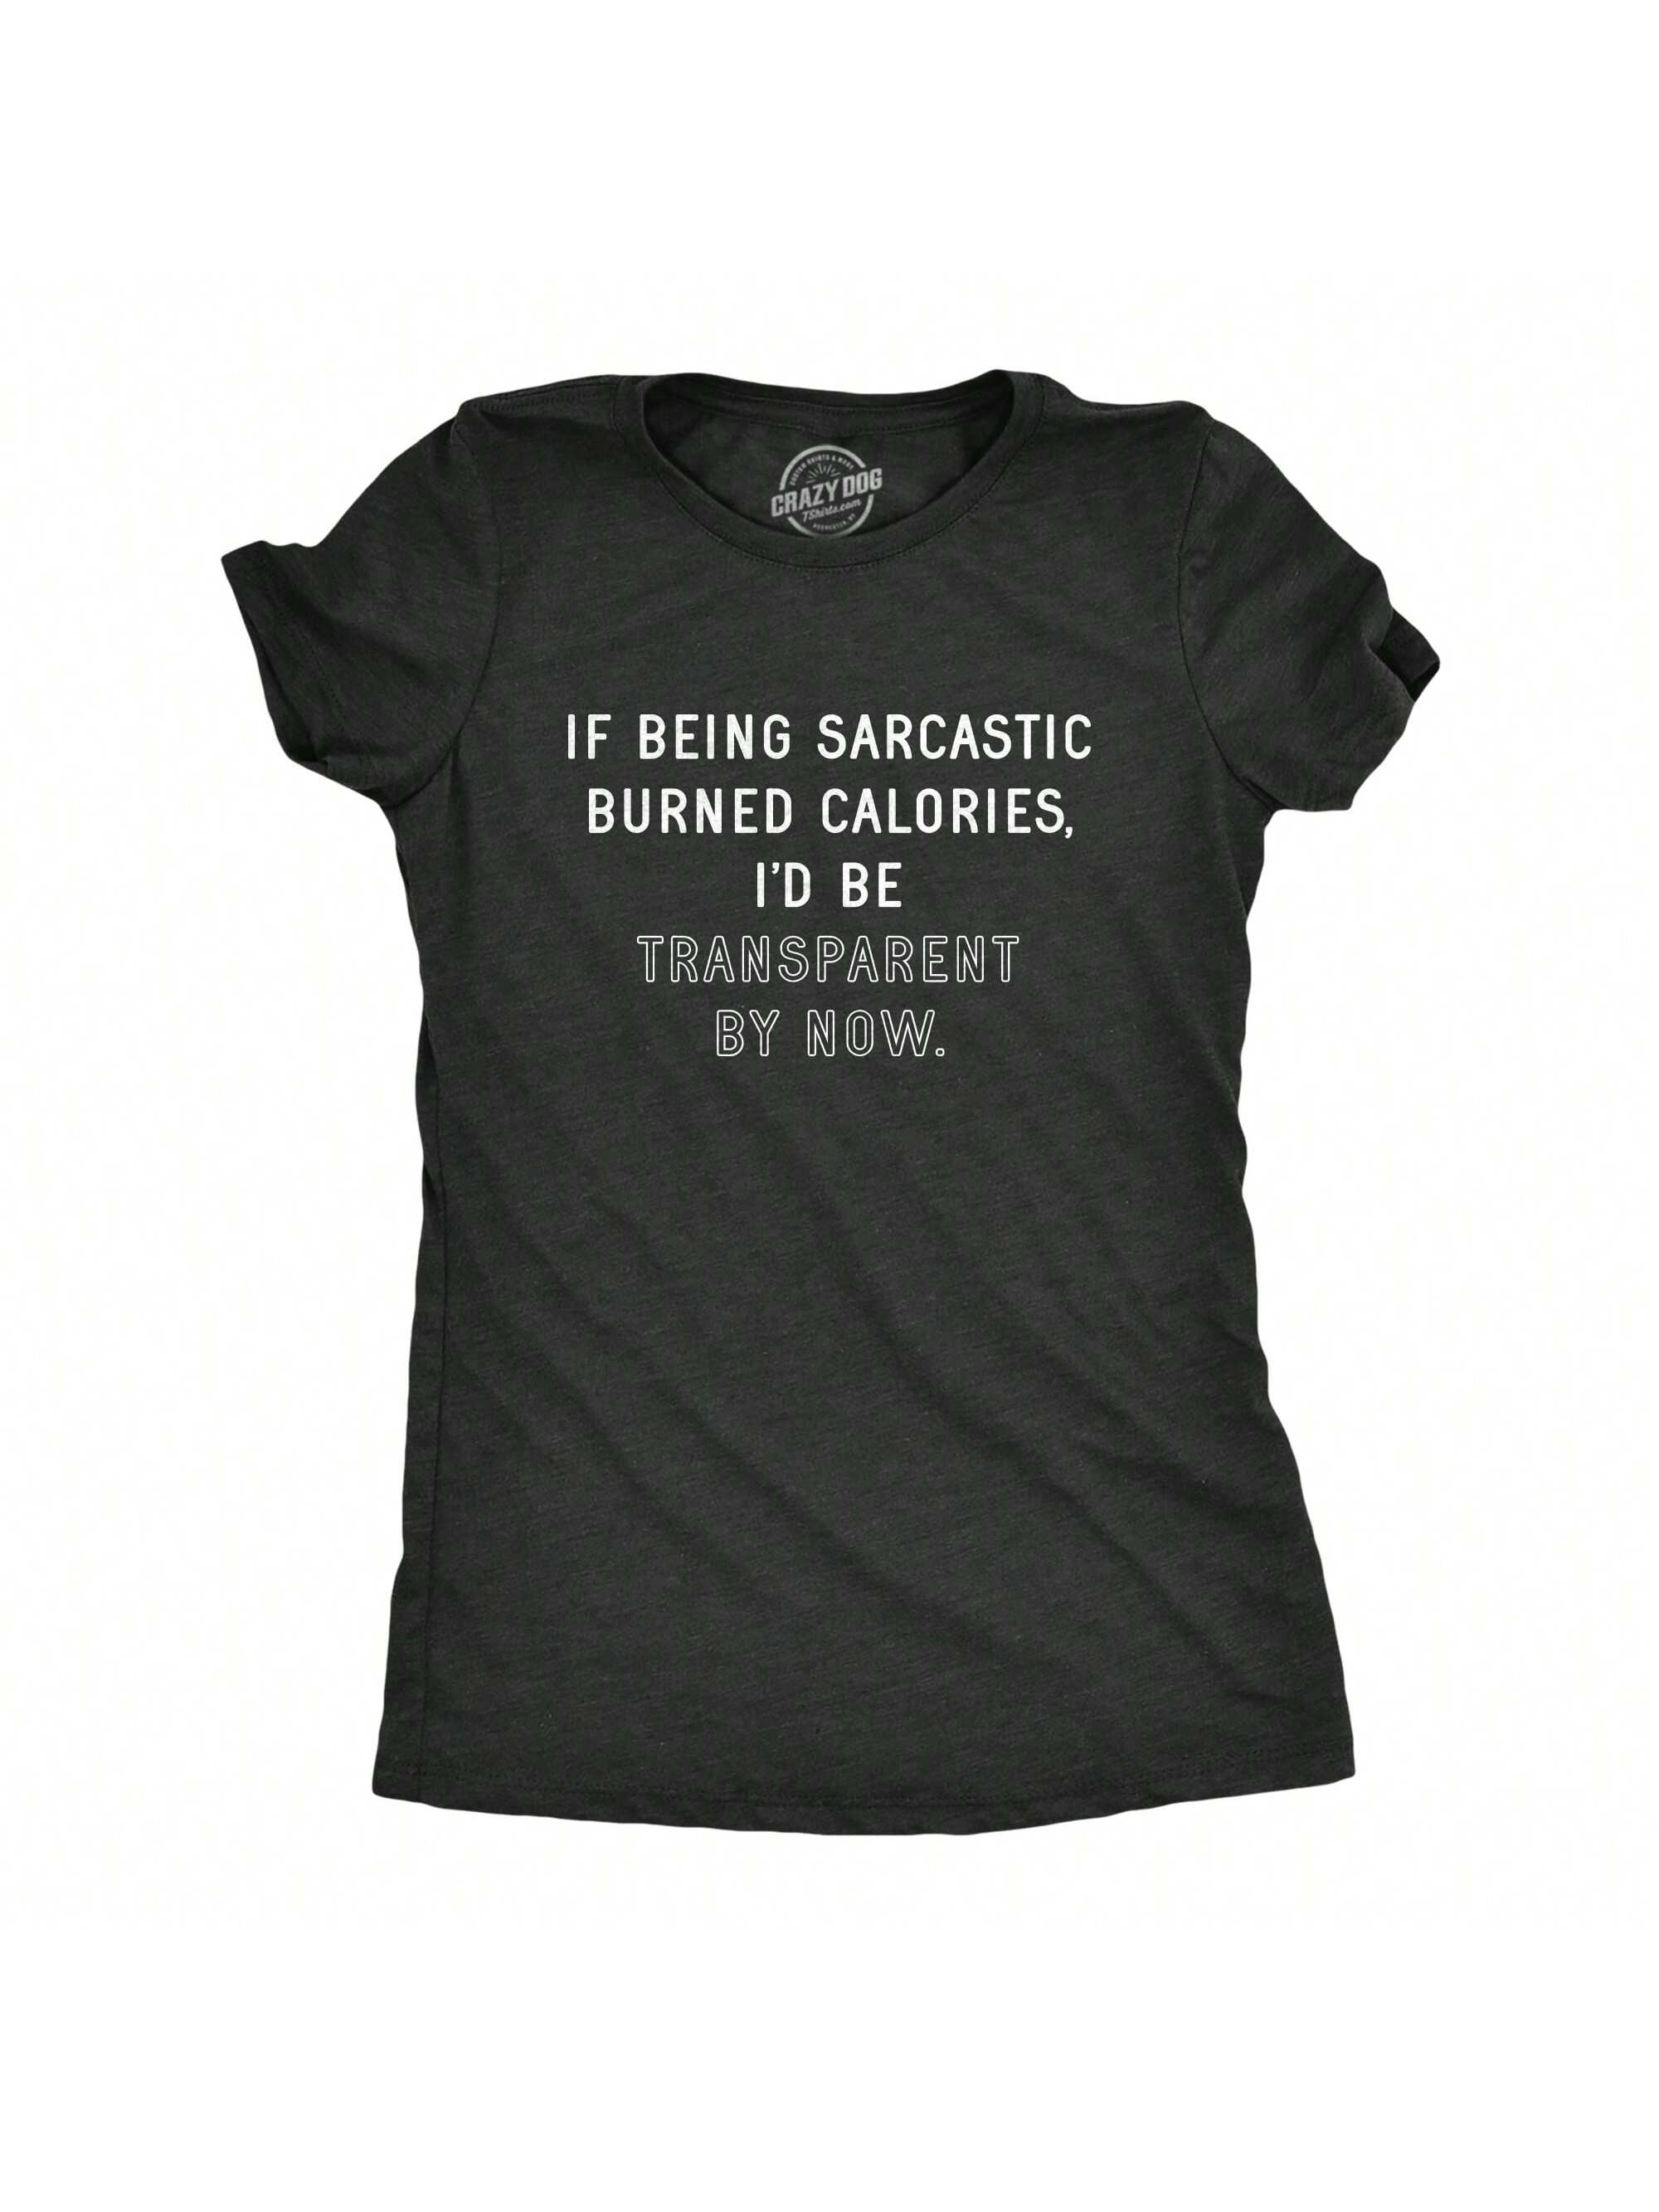 Женская футболка «Я видел эту карму», хизер блэк — калории клематис хезер хершелл 3